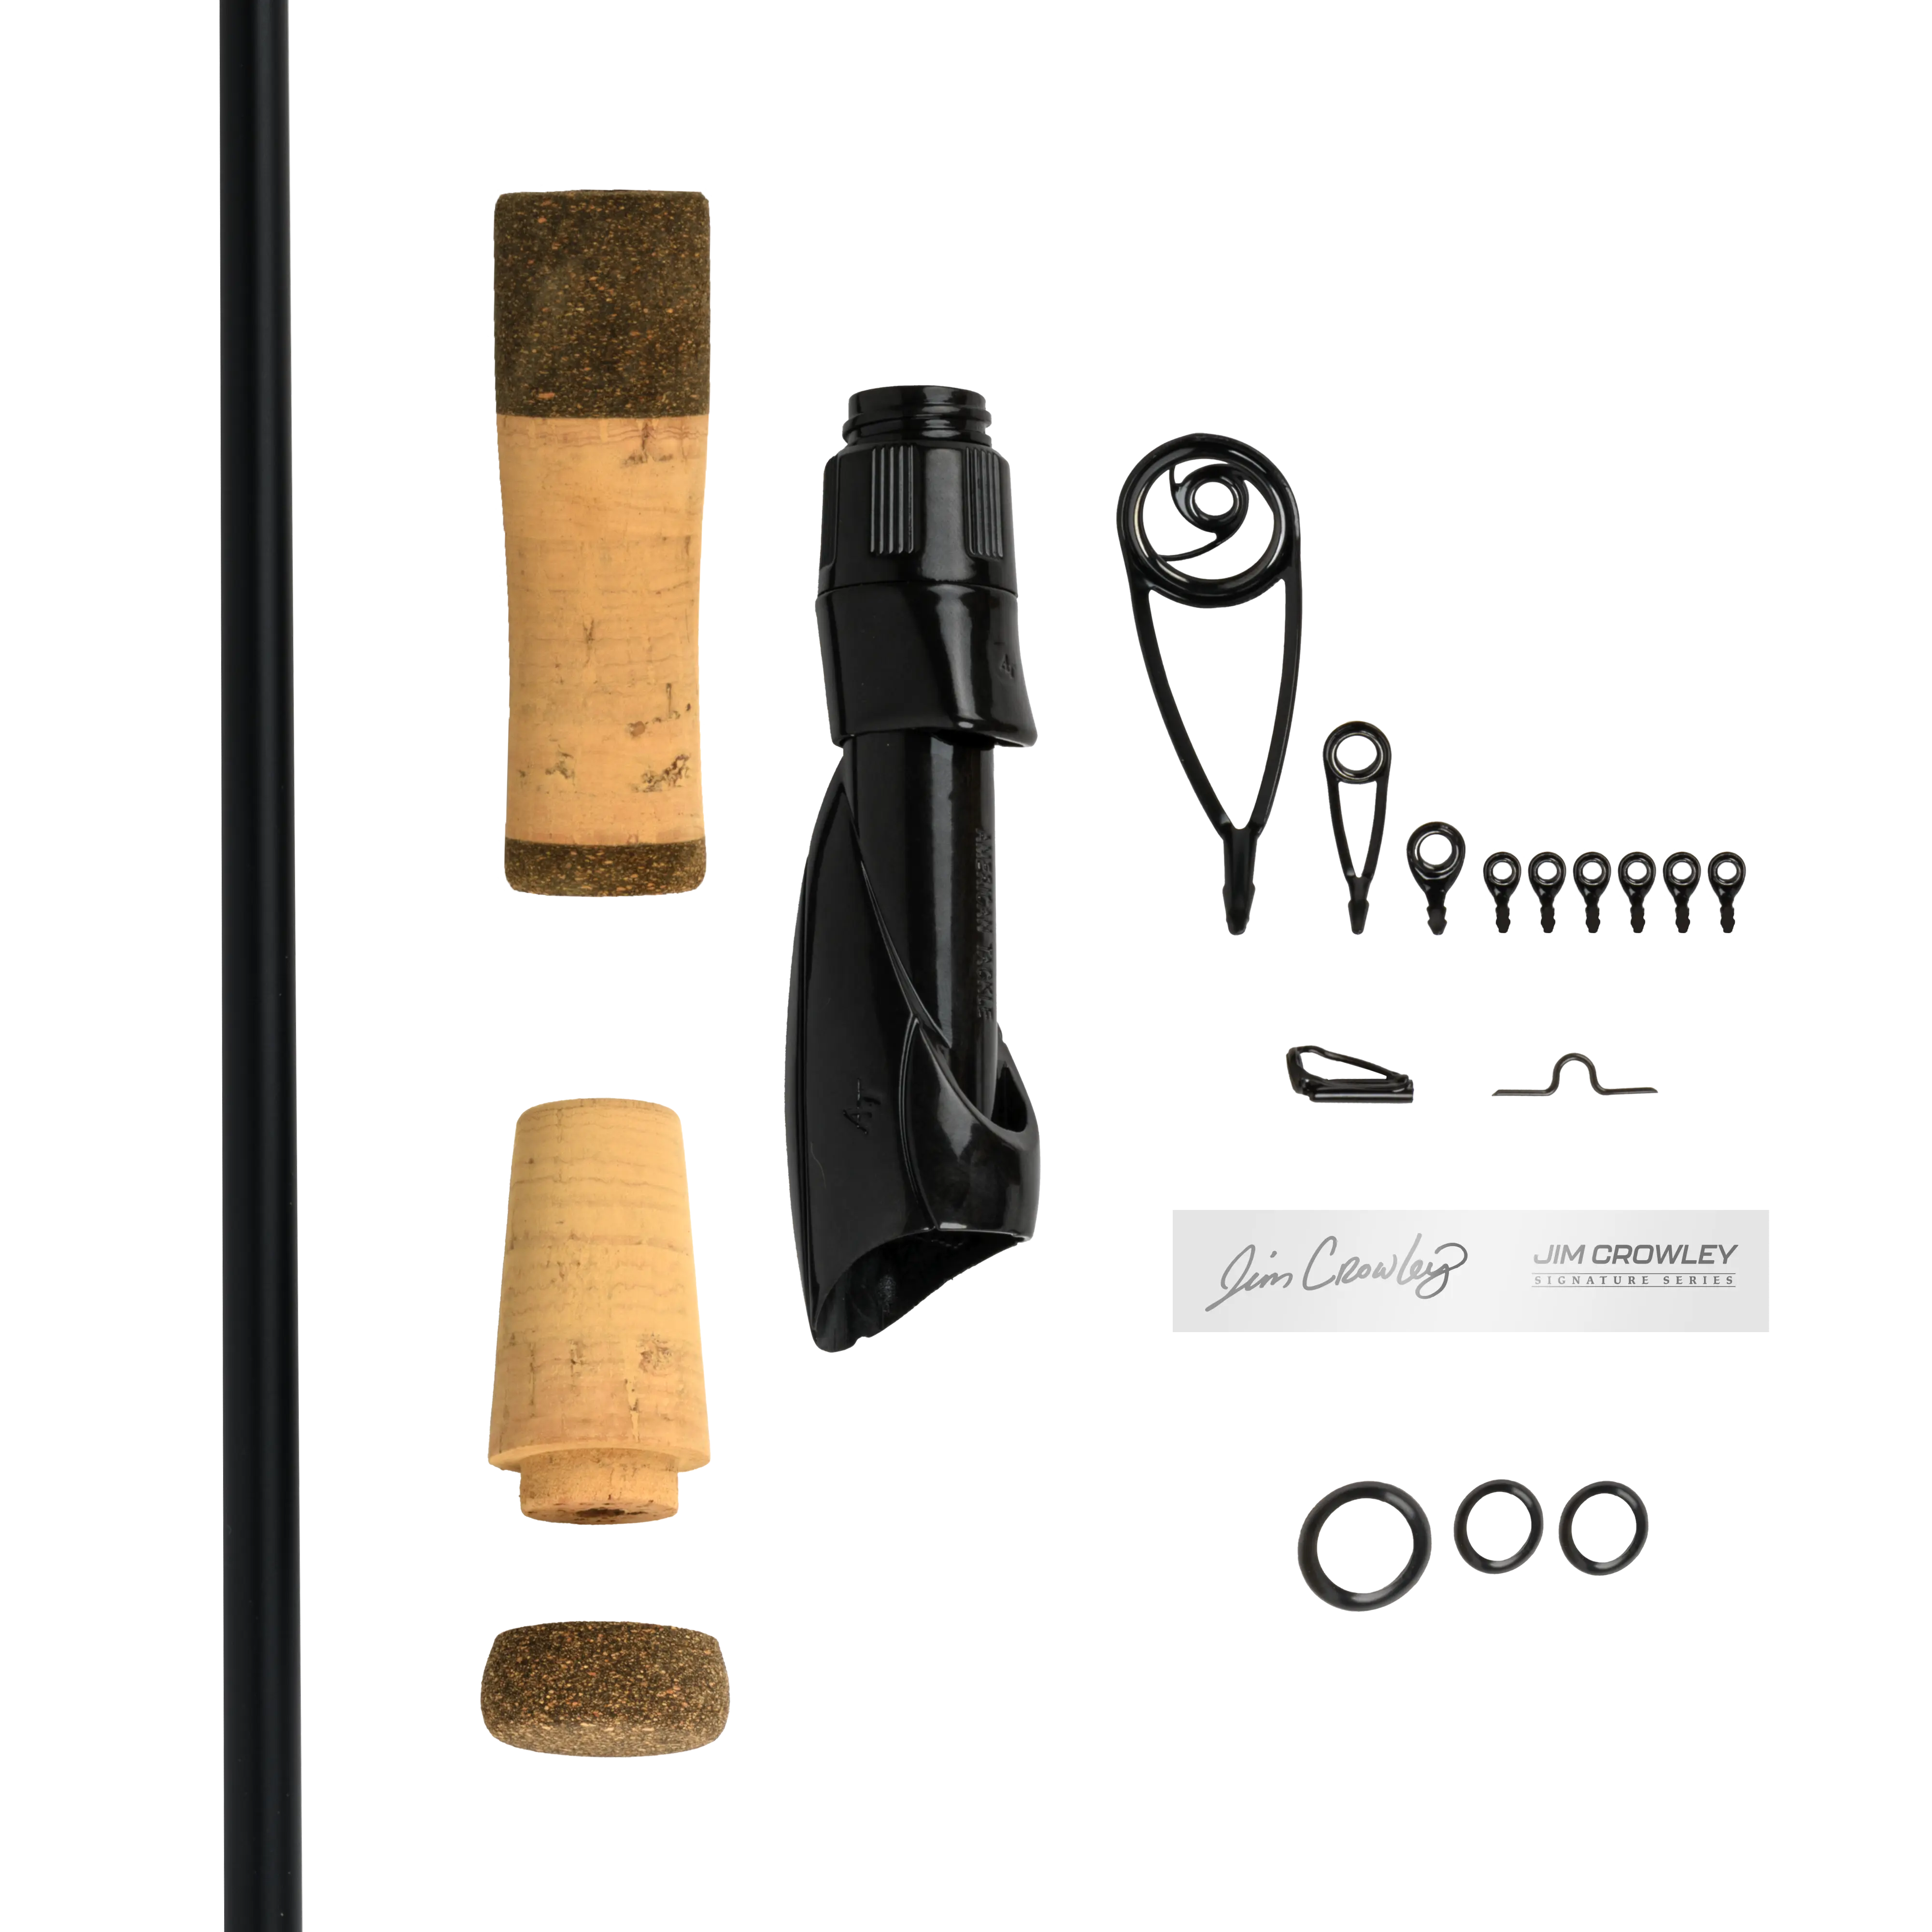 Jim Crowley 6'8" Medium Jerkbait Rod Component Kit